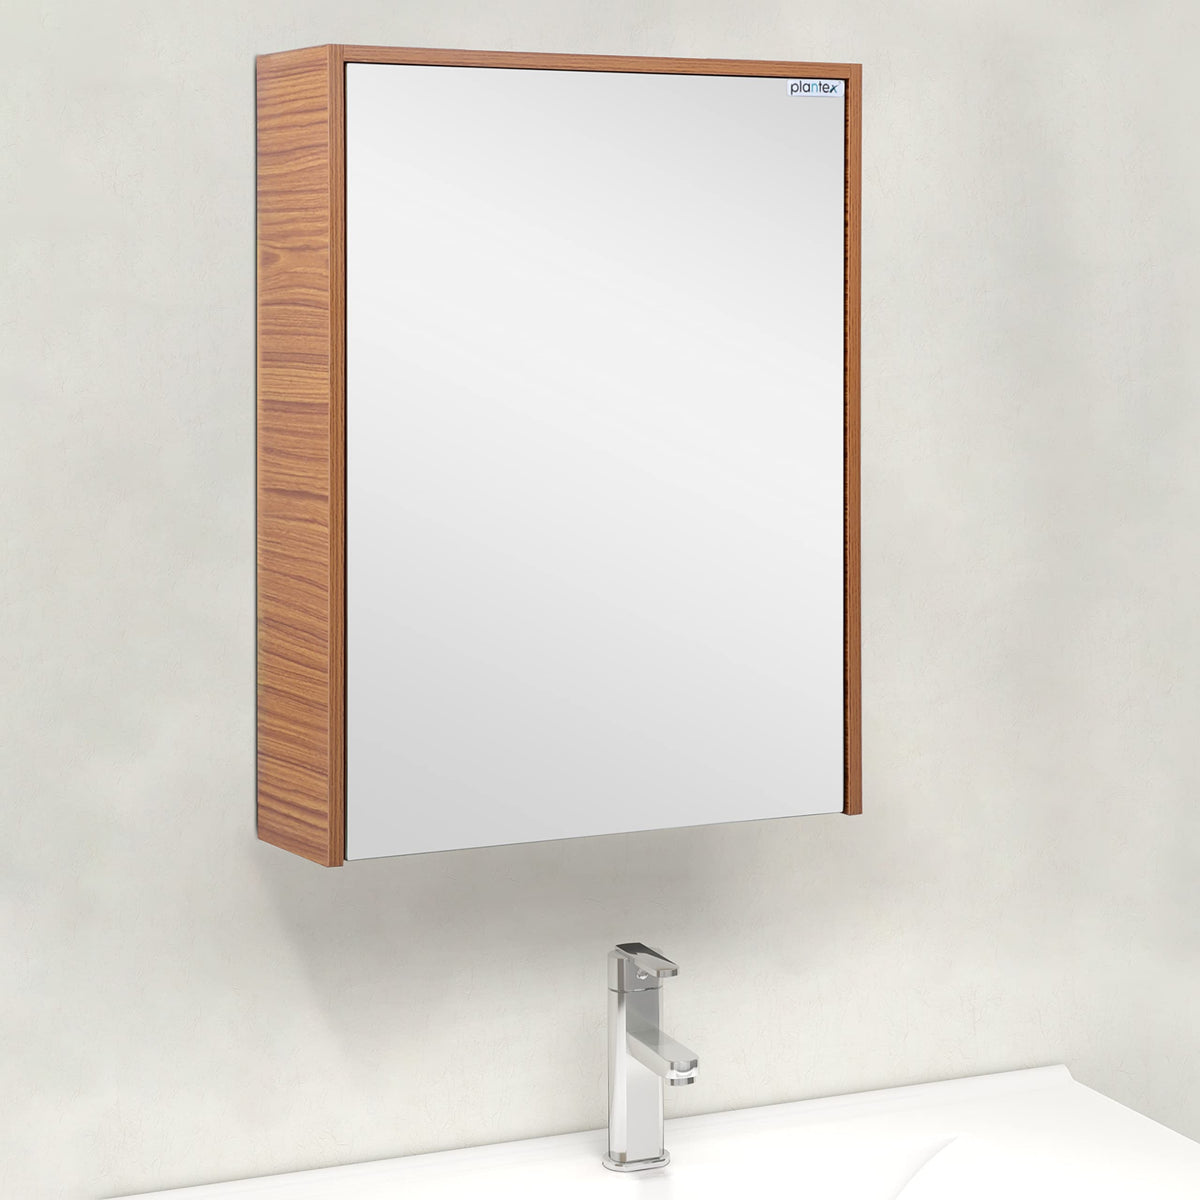 Plantex Bathroom Mirror Cabinet - HDHMR Wood Mayfair Bathroom Organizer Cabinet (18 x 24 Inches) Bathroom Accessories (Rose Wood)